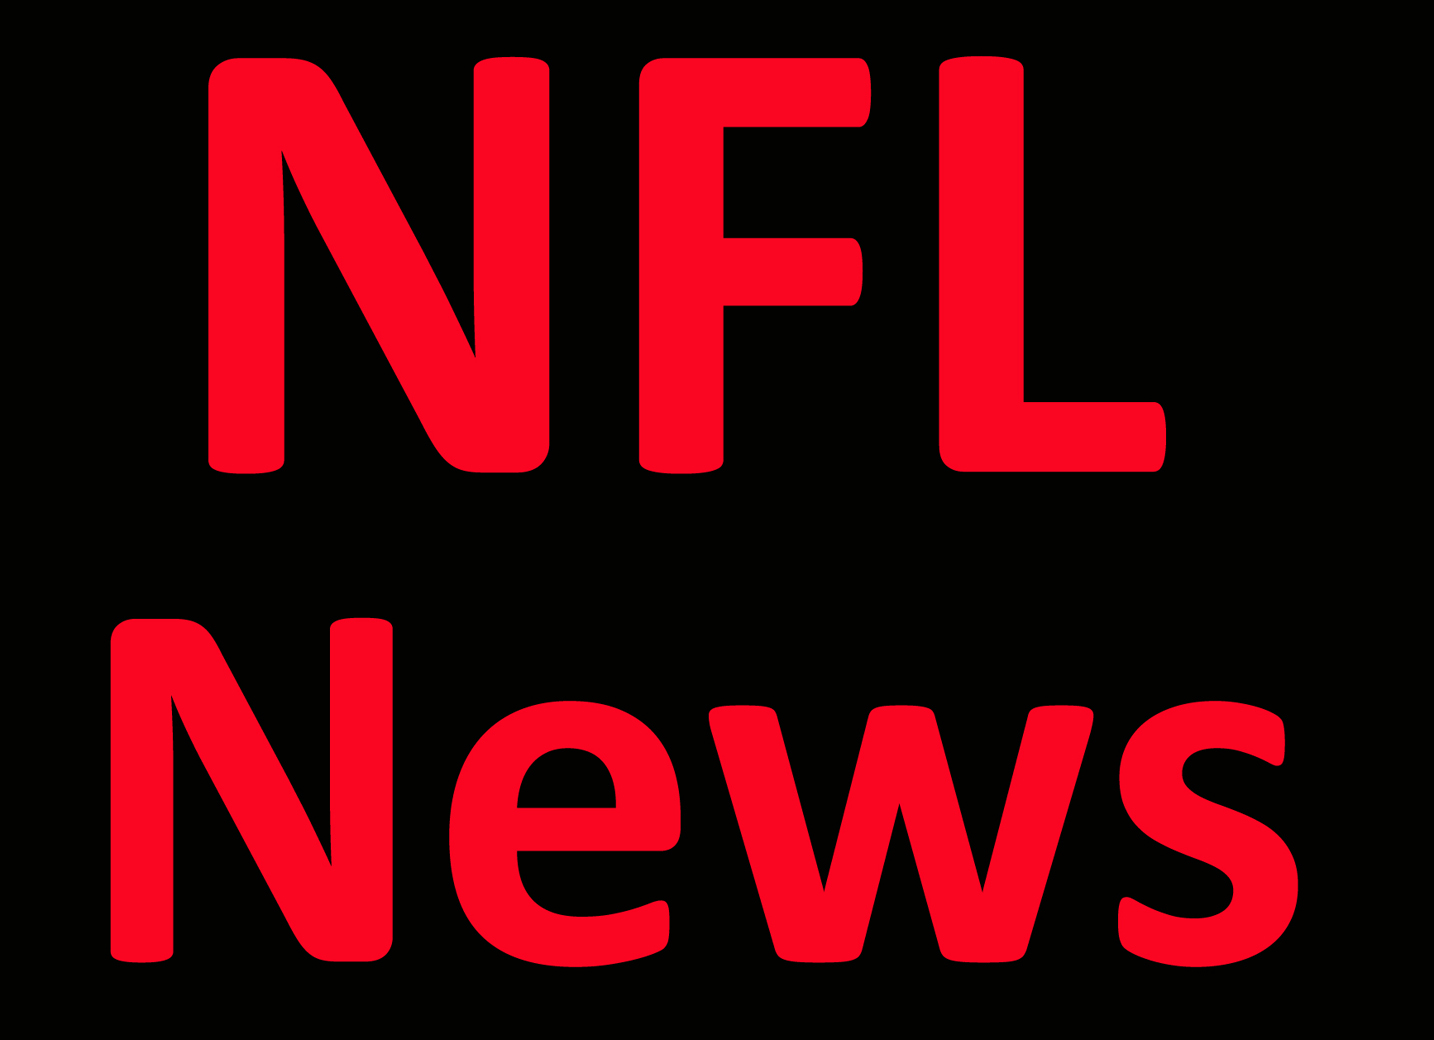 NFL News: Judge returns to Patriots as offensive assistant Per Report